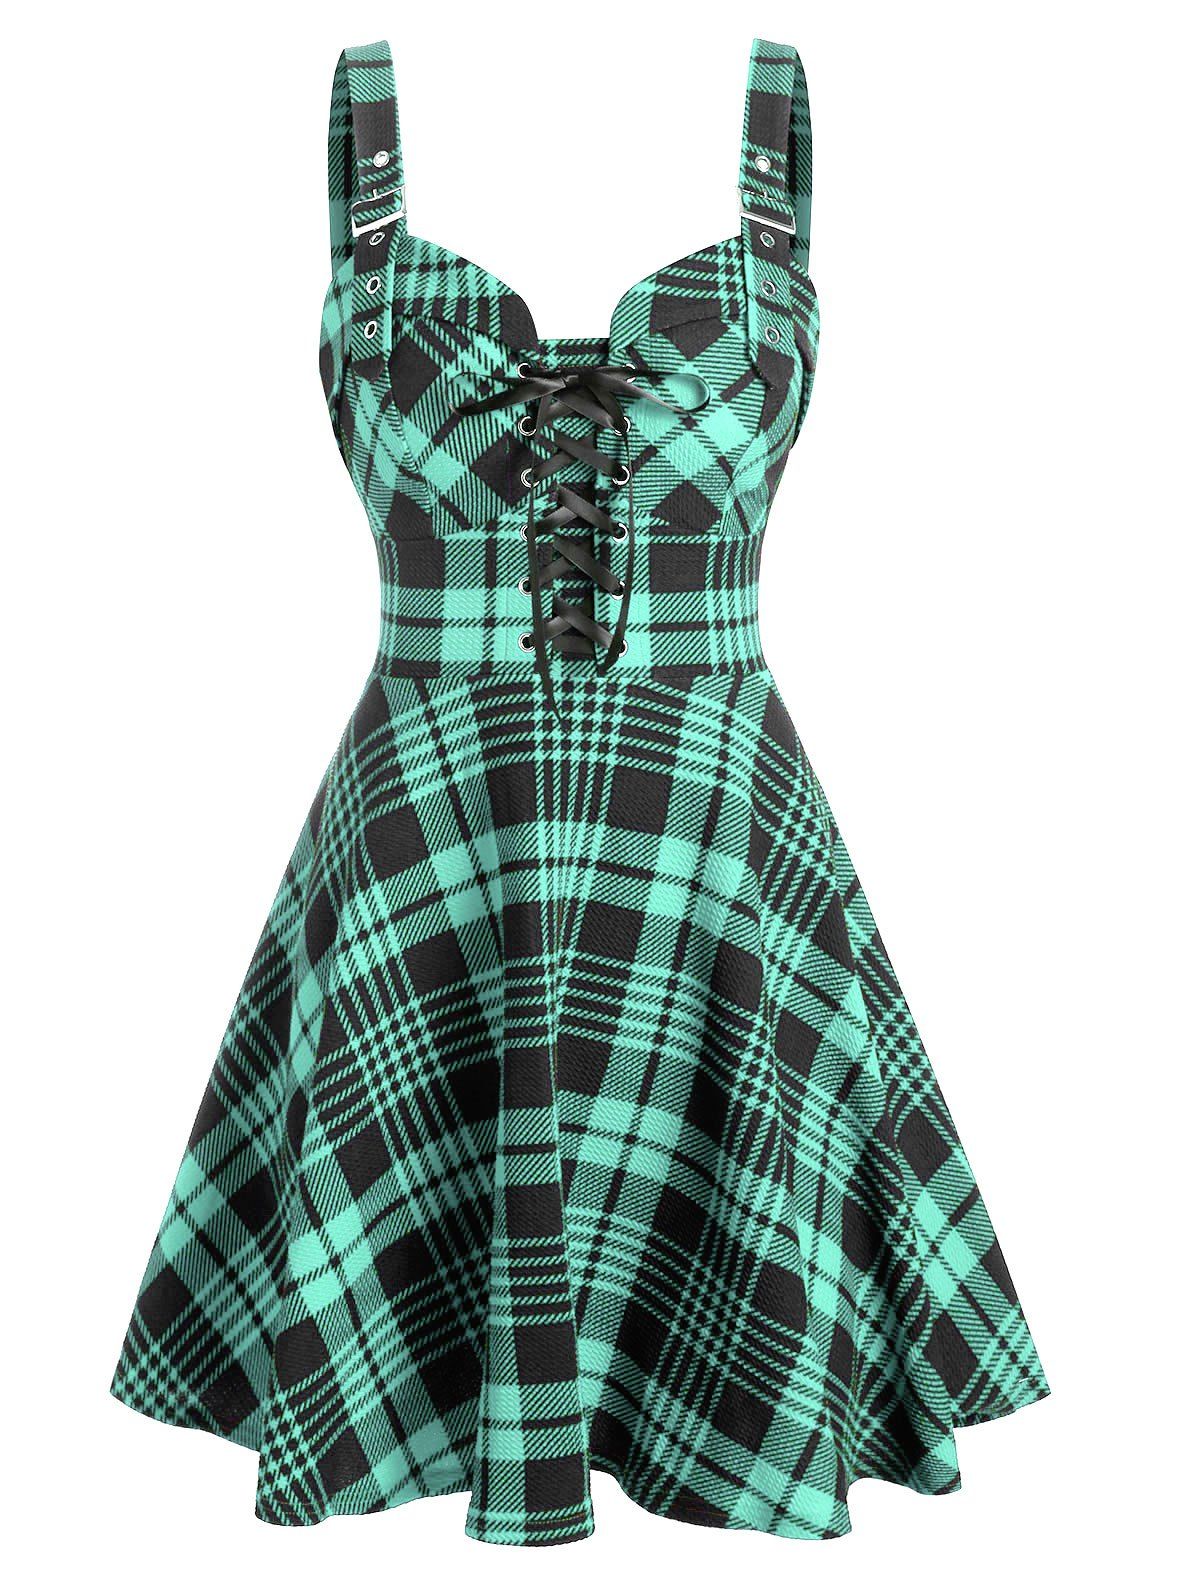 Plaid Print Lace-up Buckle Strap Sleeveless Dress - LIGHT GREEN 2XL